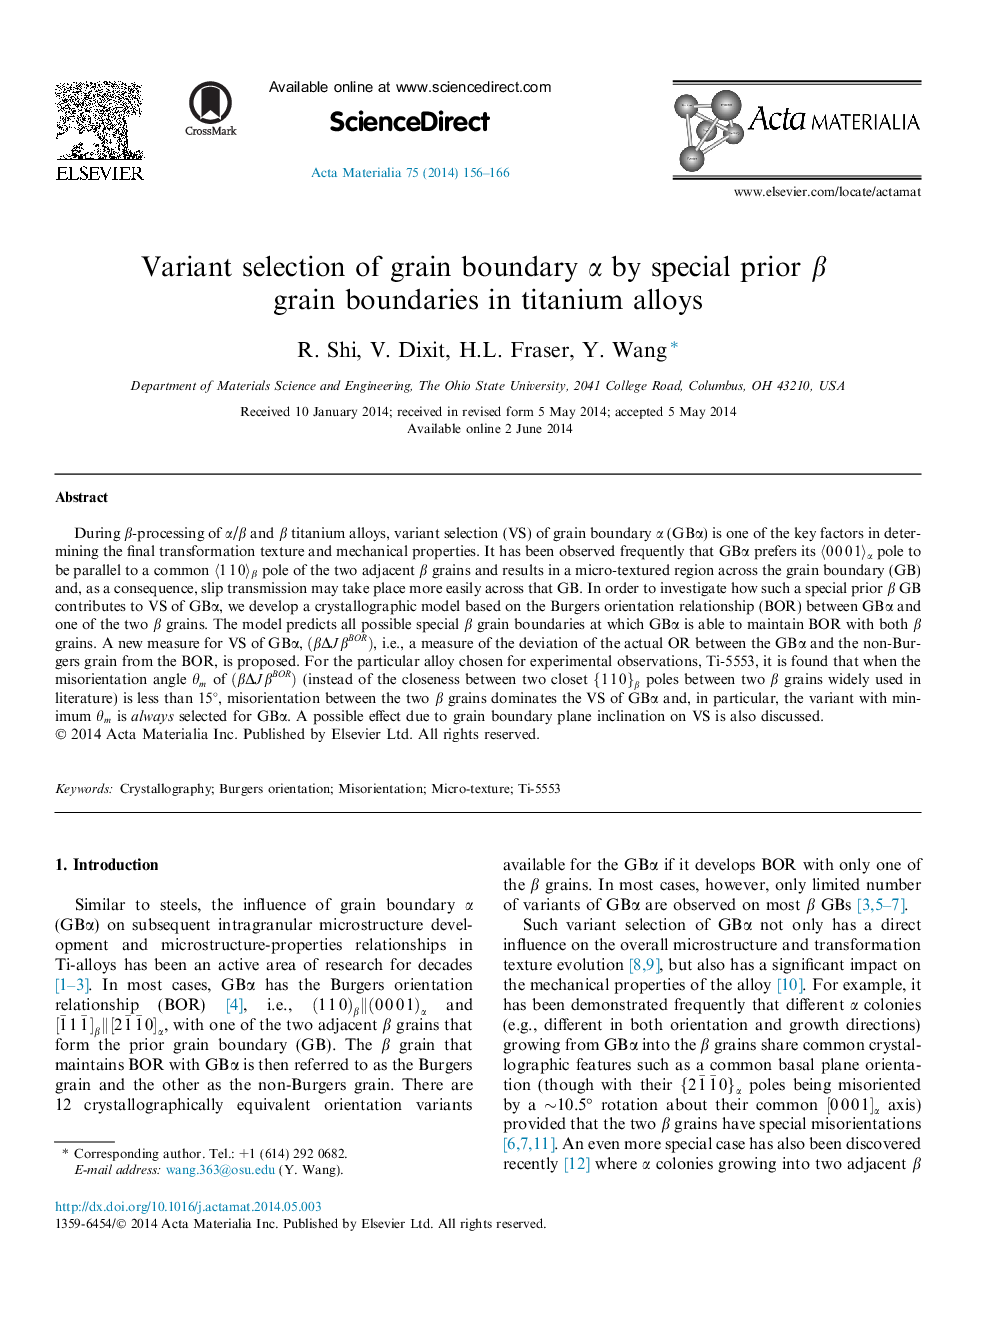 Variant selection of grain boundary α by special prior β grain boundaries in titanium alloys